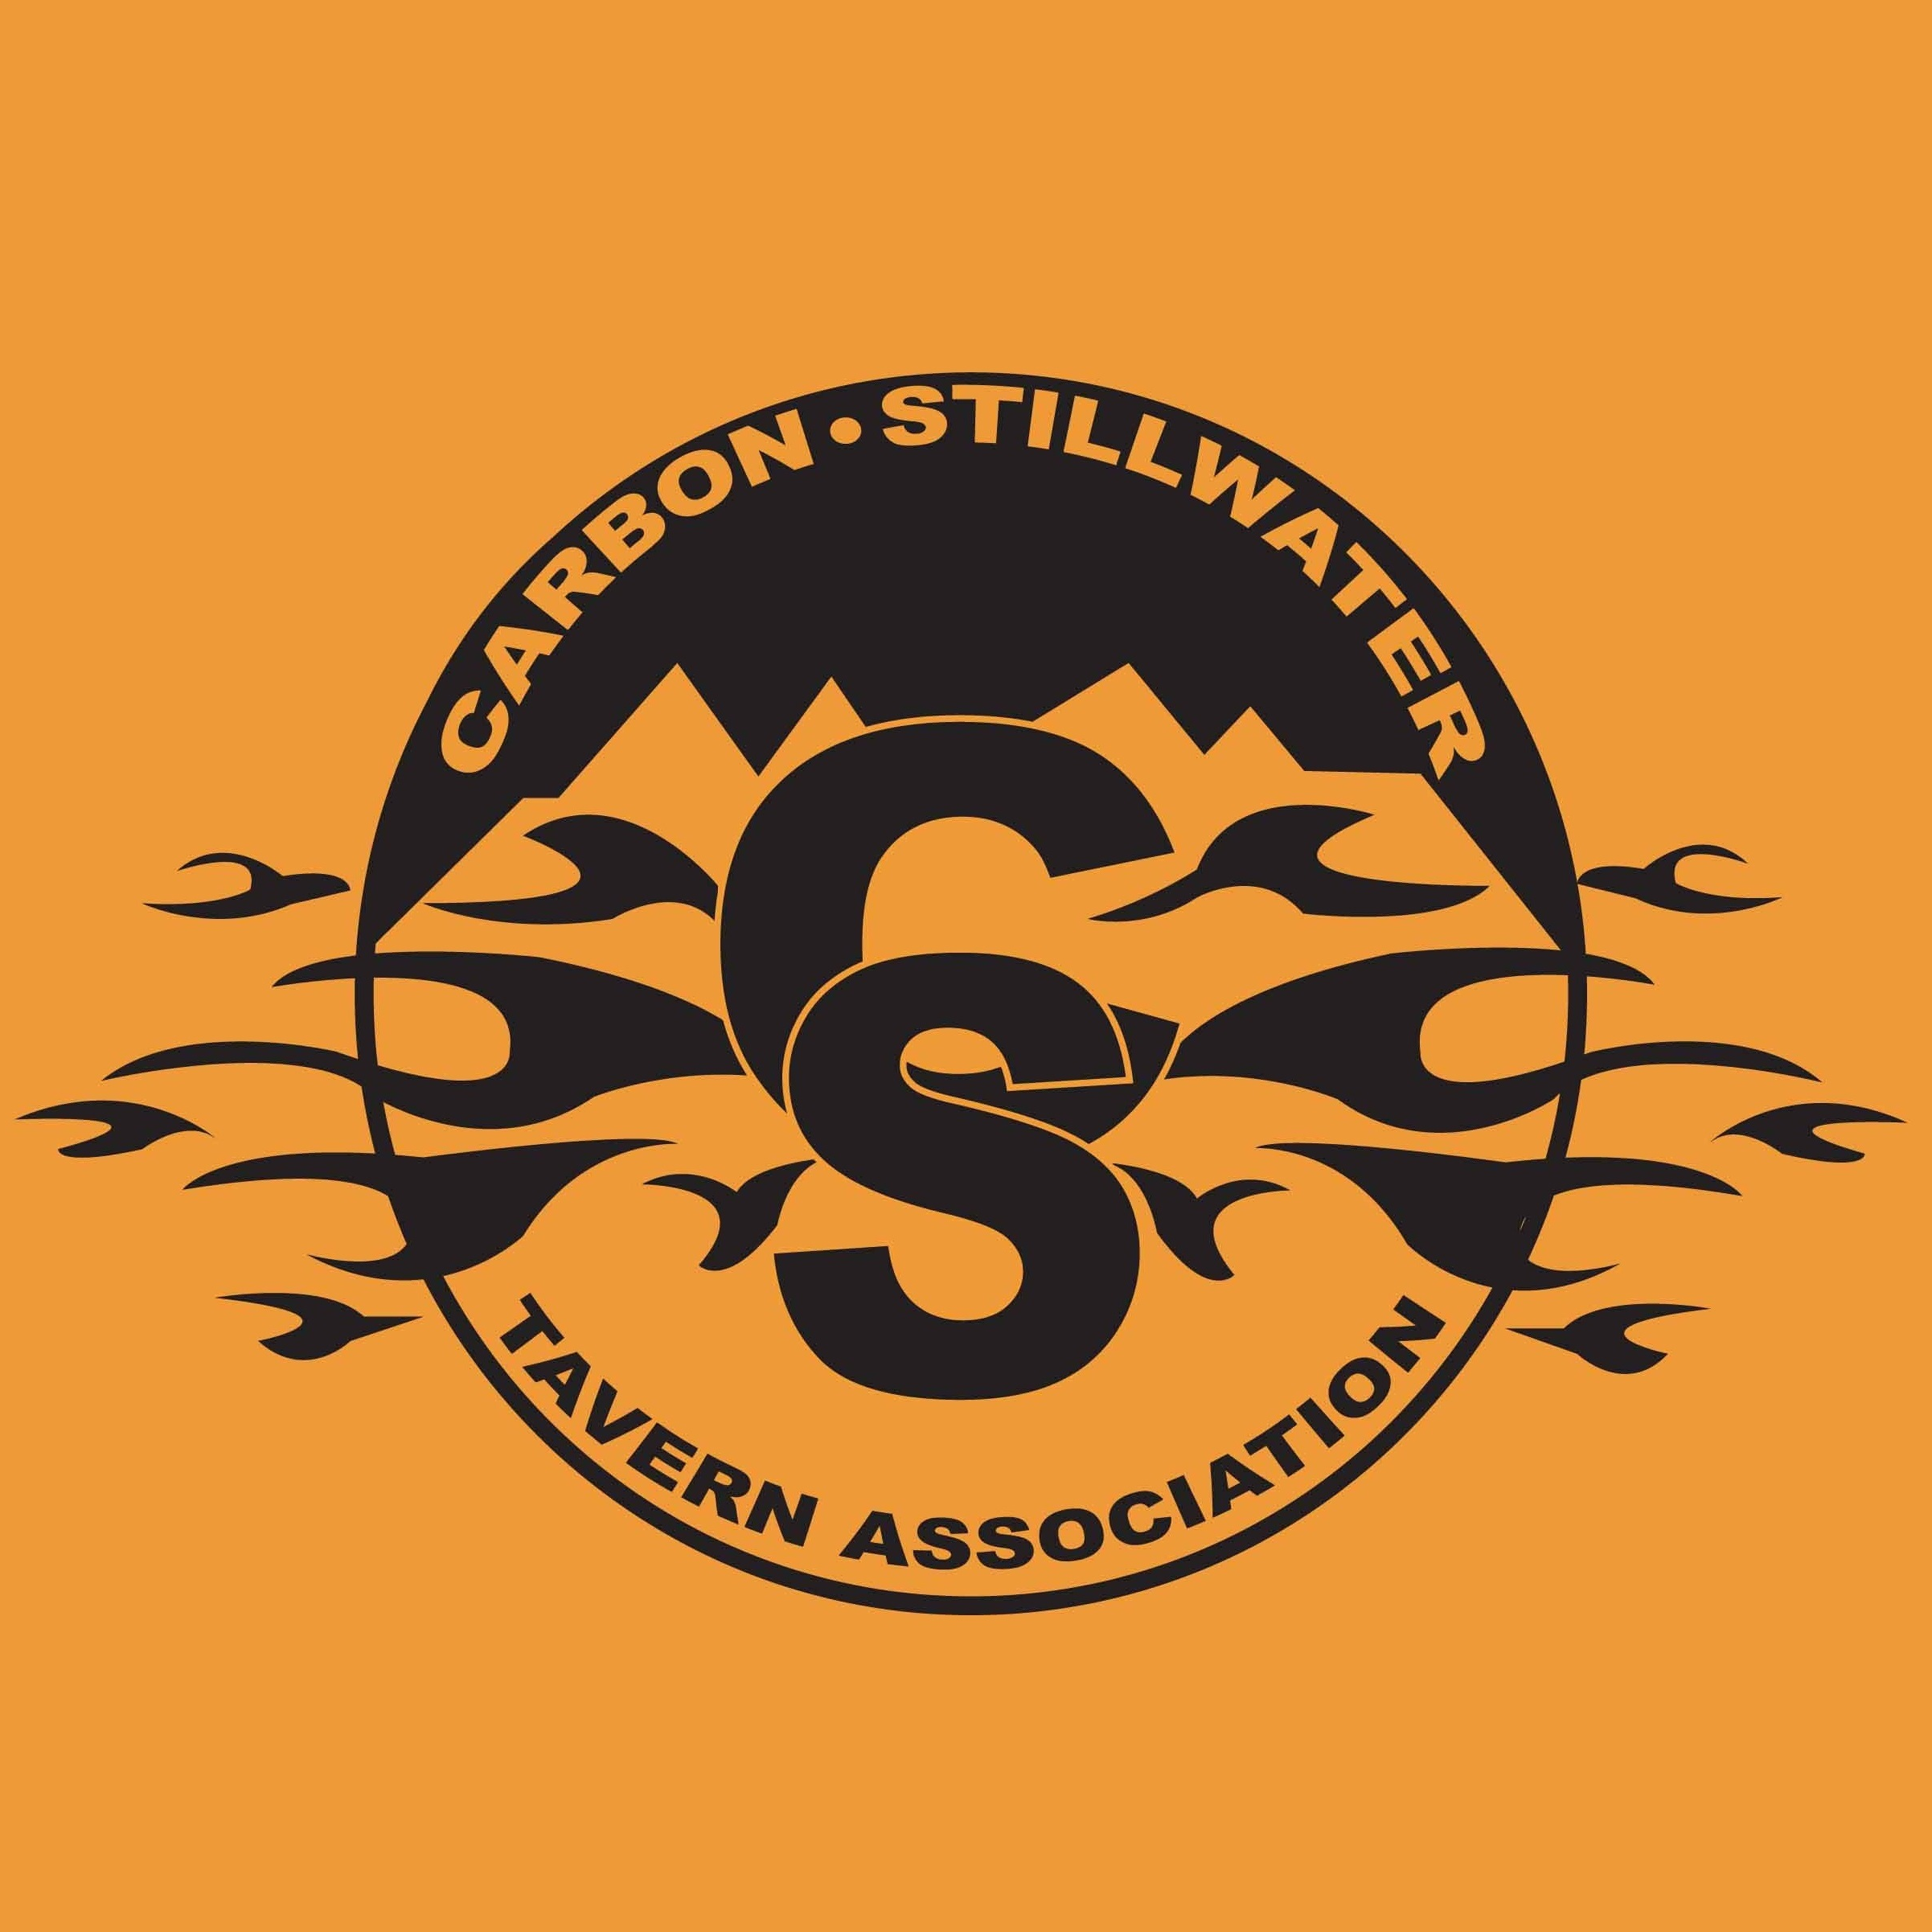 Carbon-Stillwater Tavern Association Scholarship